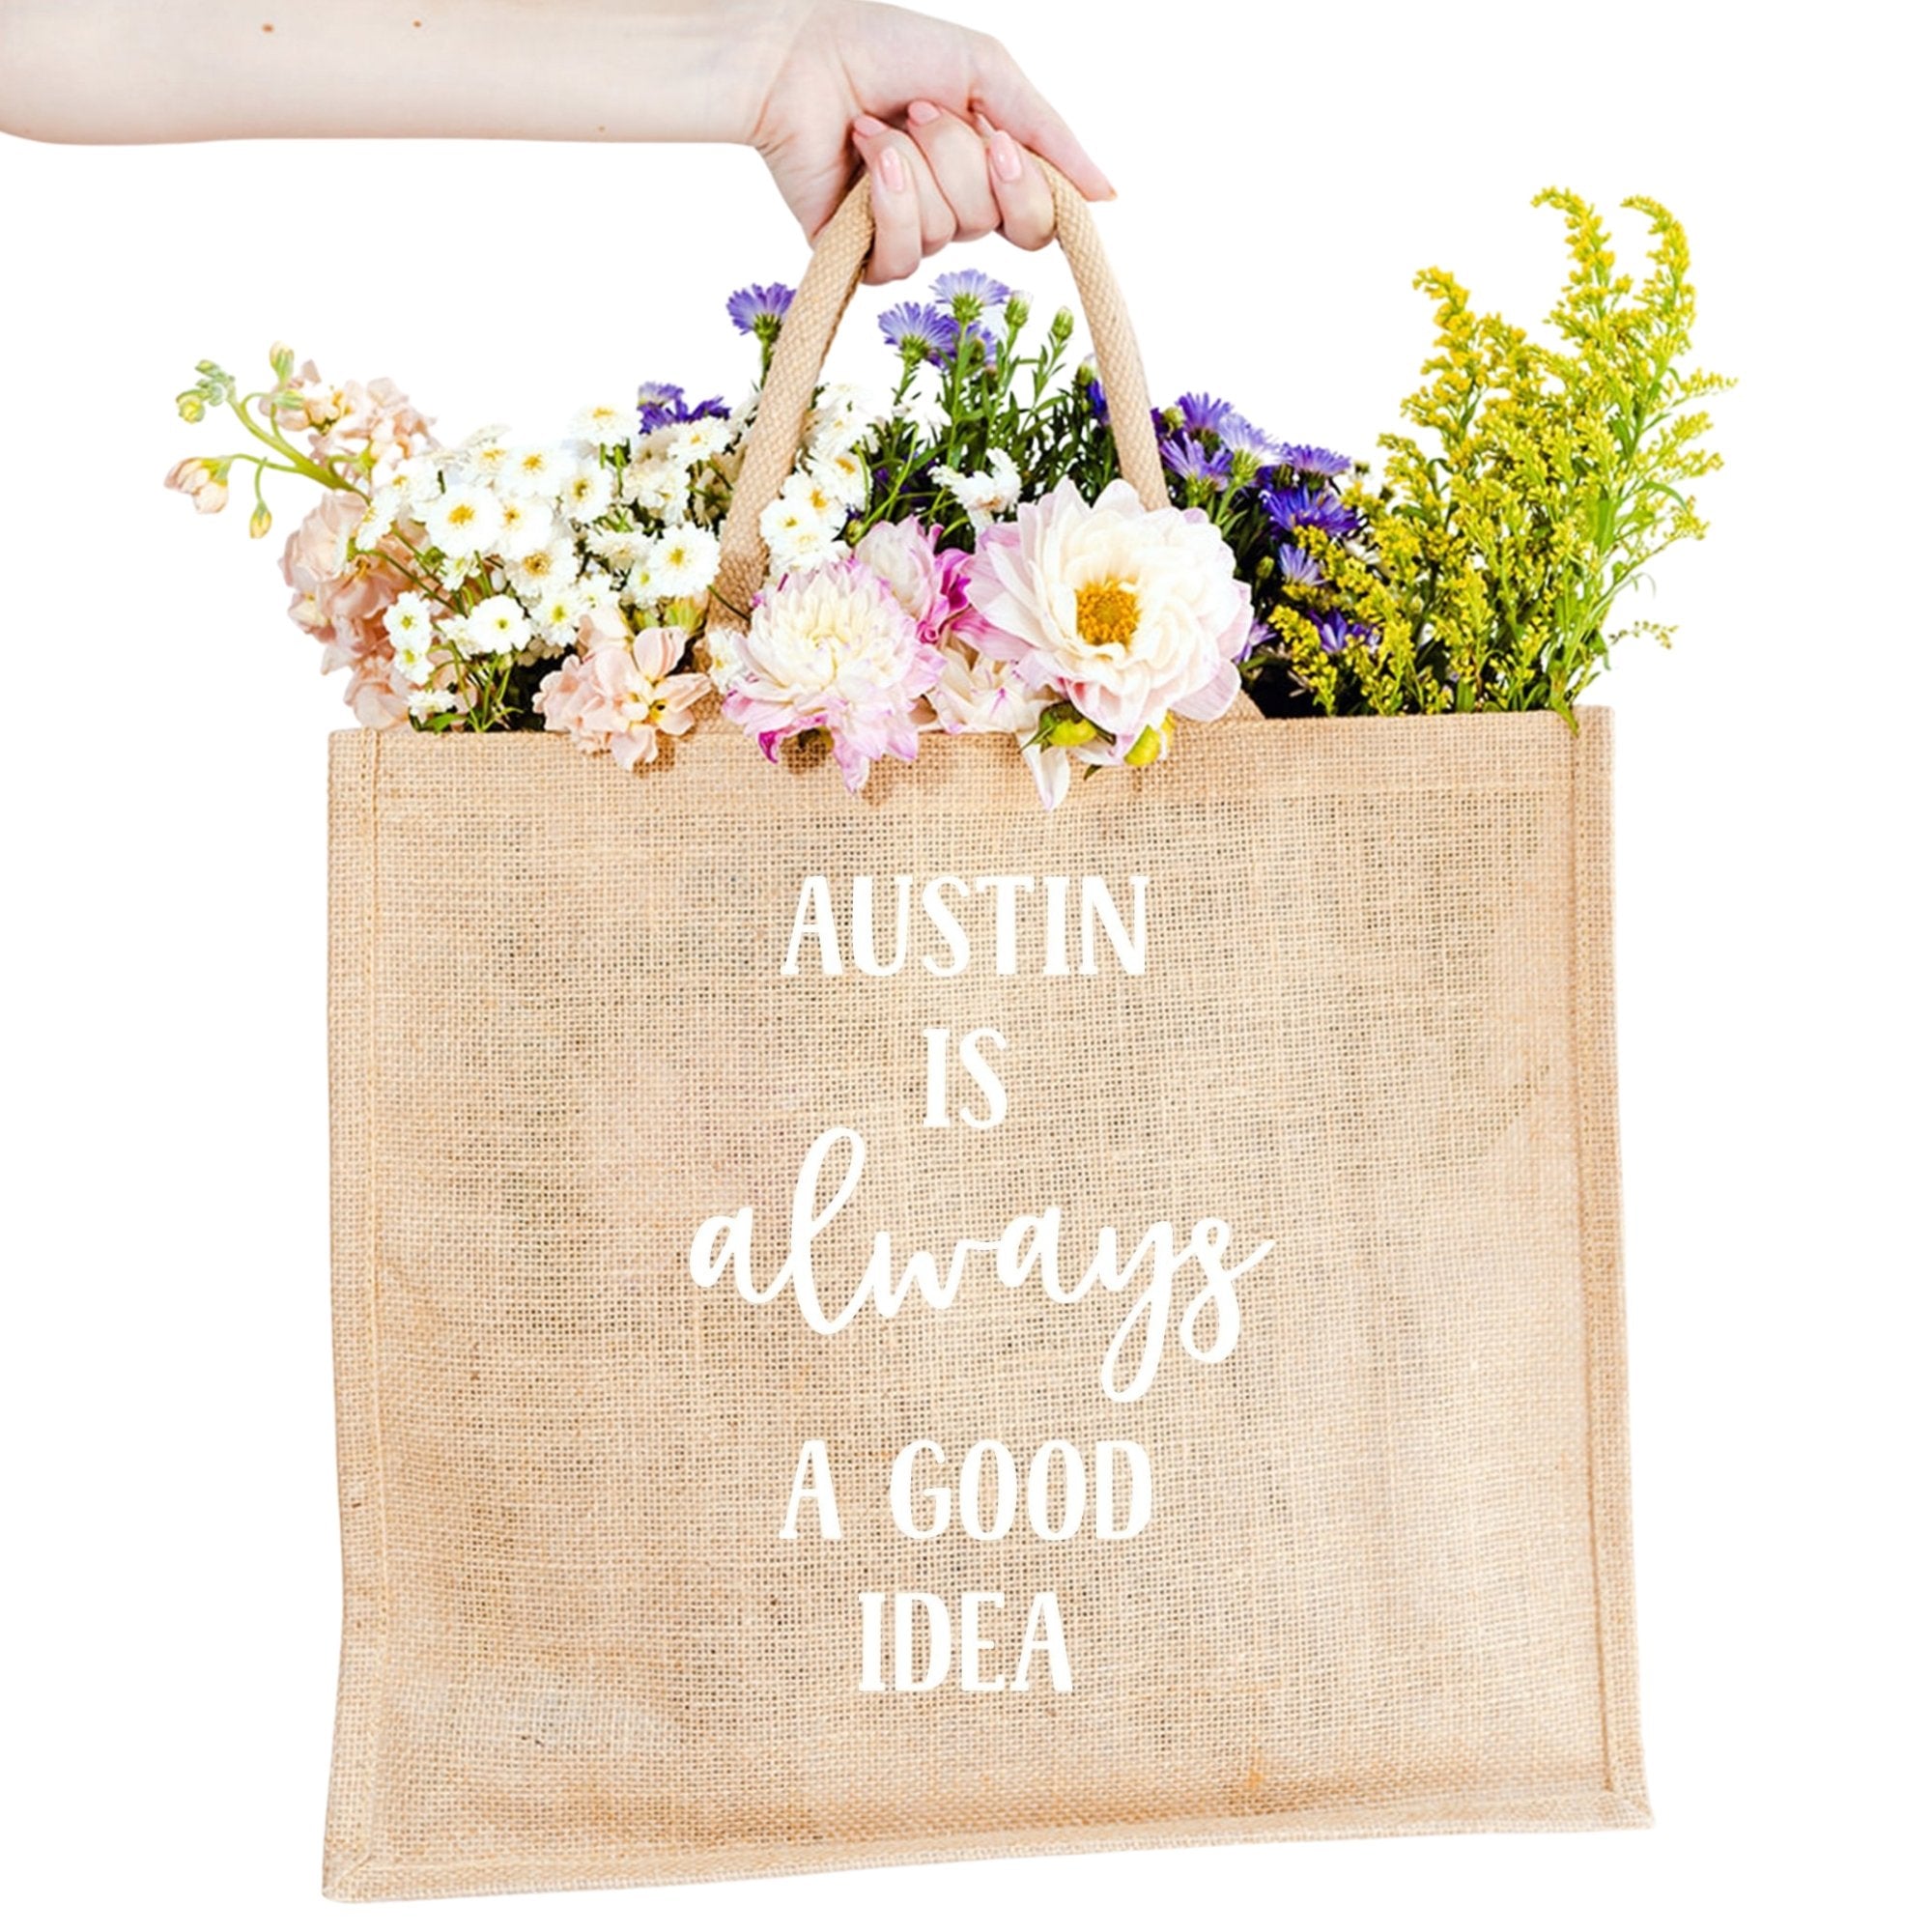 A custom jute bag reads "Austin Is Always A Good Idea" on the front